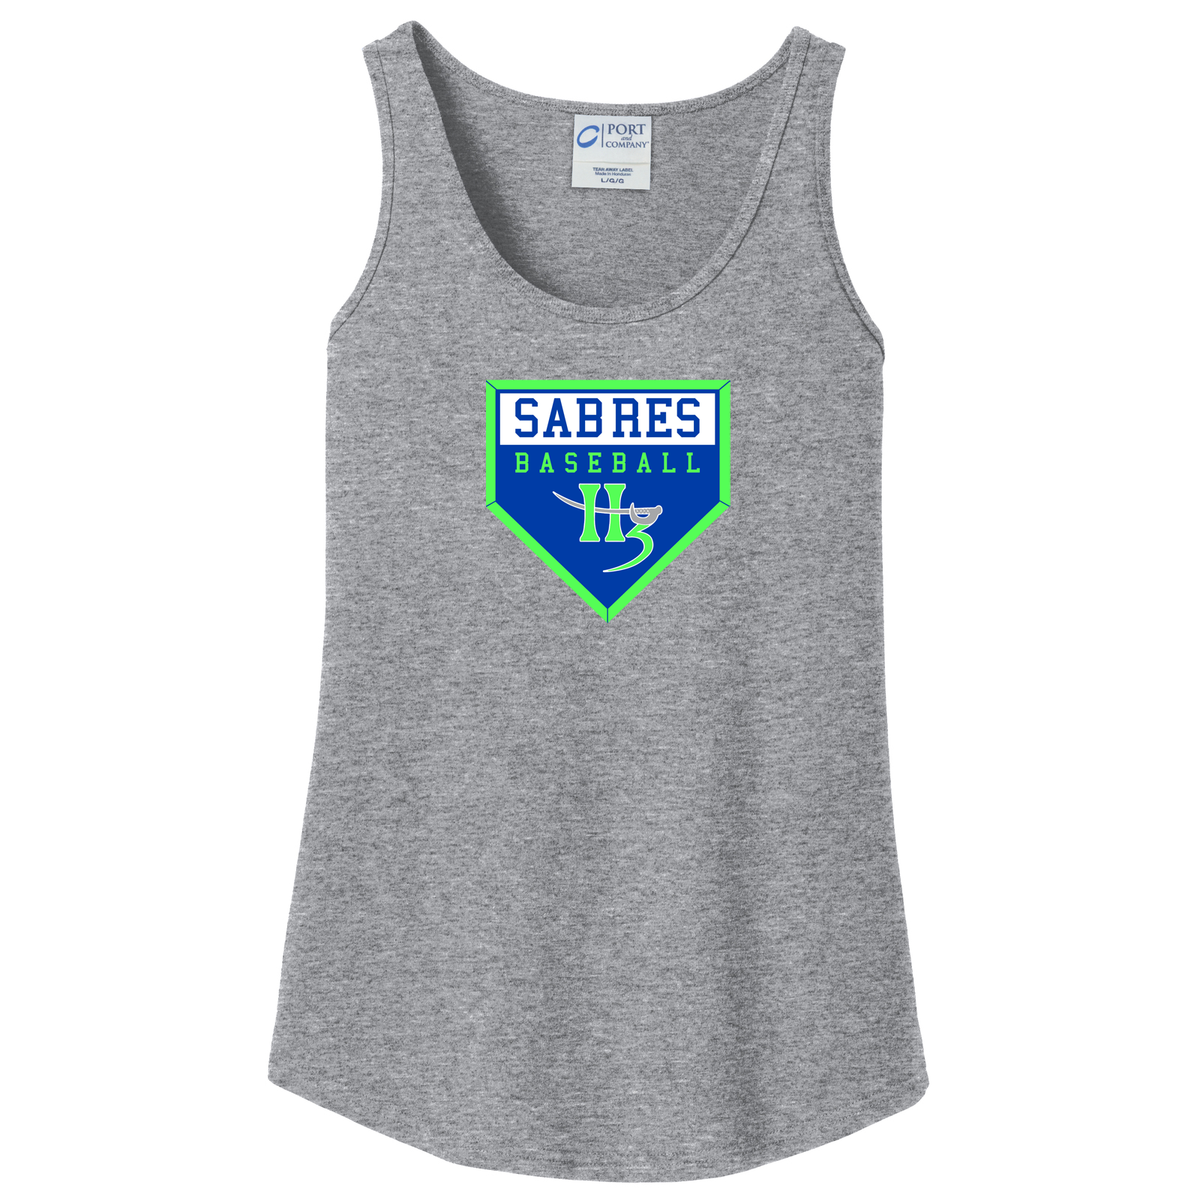 H3 Sabres Baseball  Women's Tank Top